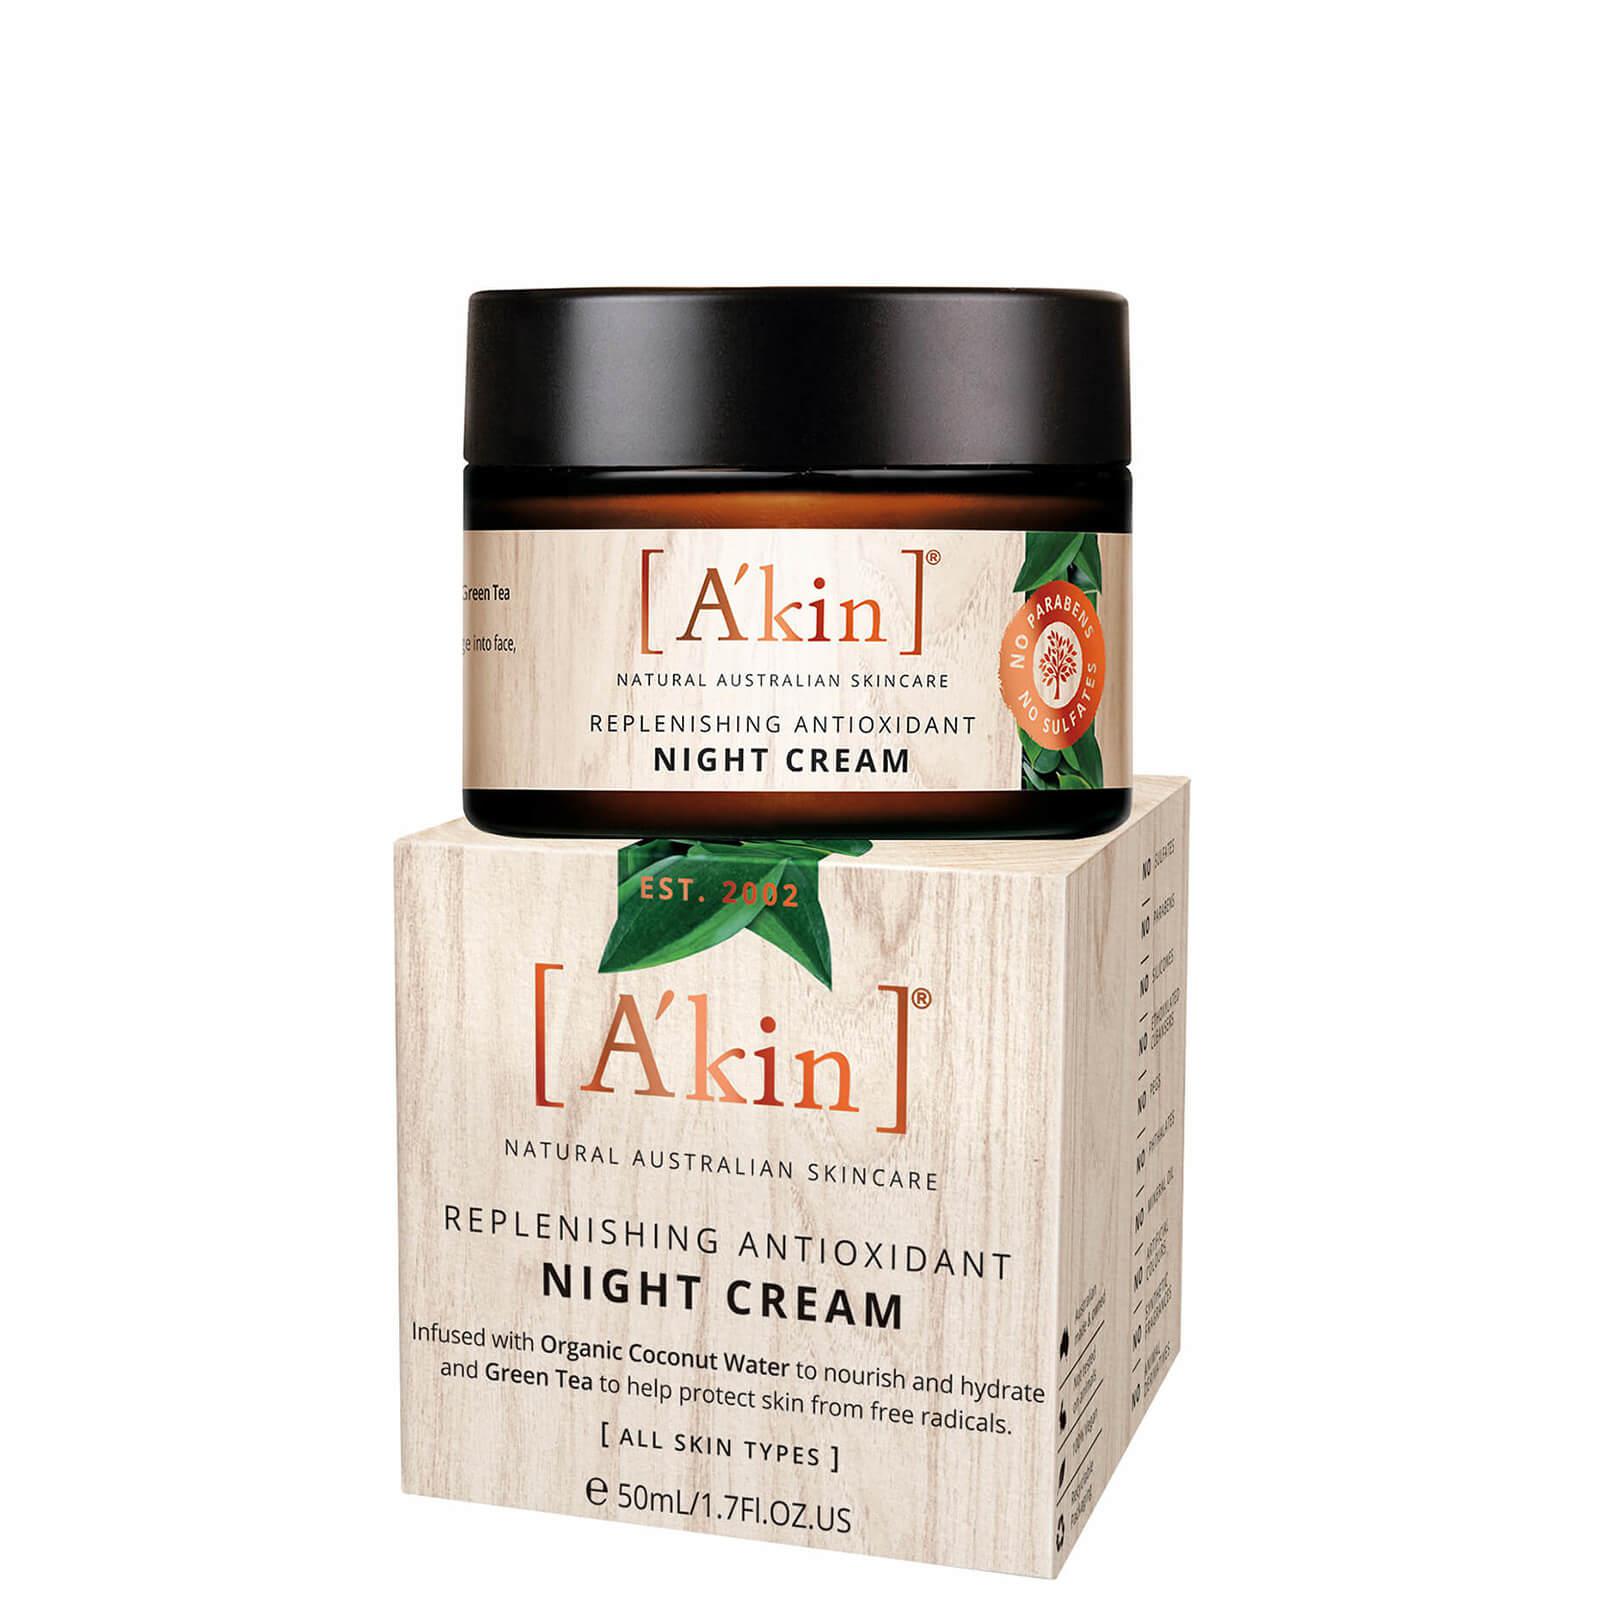 A'kin Replenishng Antioxidant Night Cream